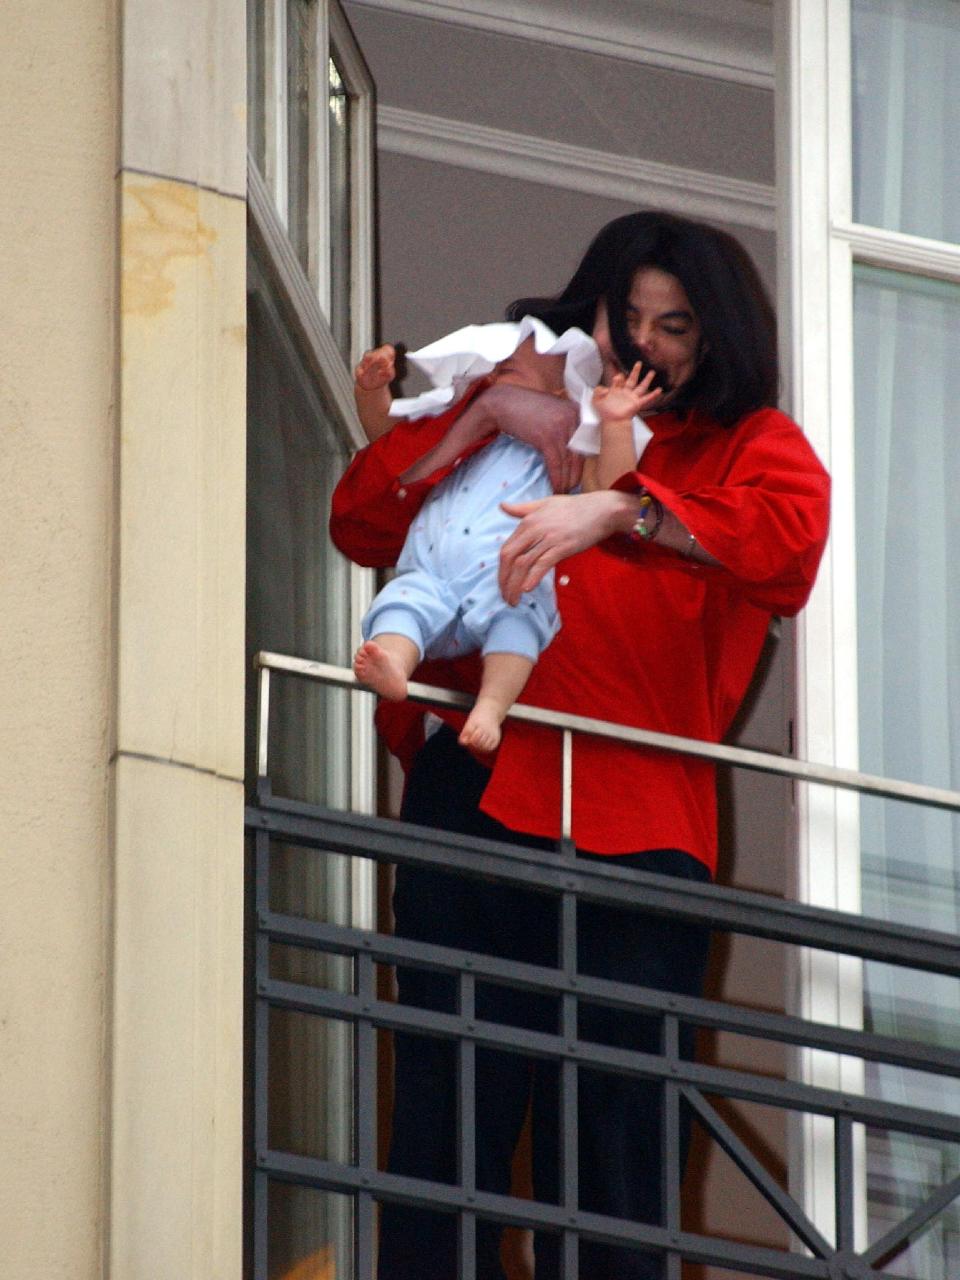 Michael Jackson’s son, Blanket